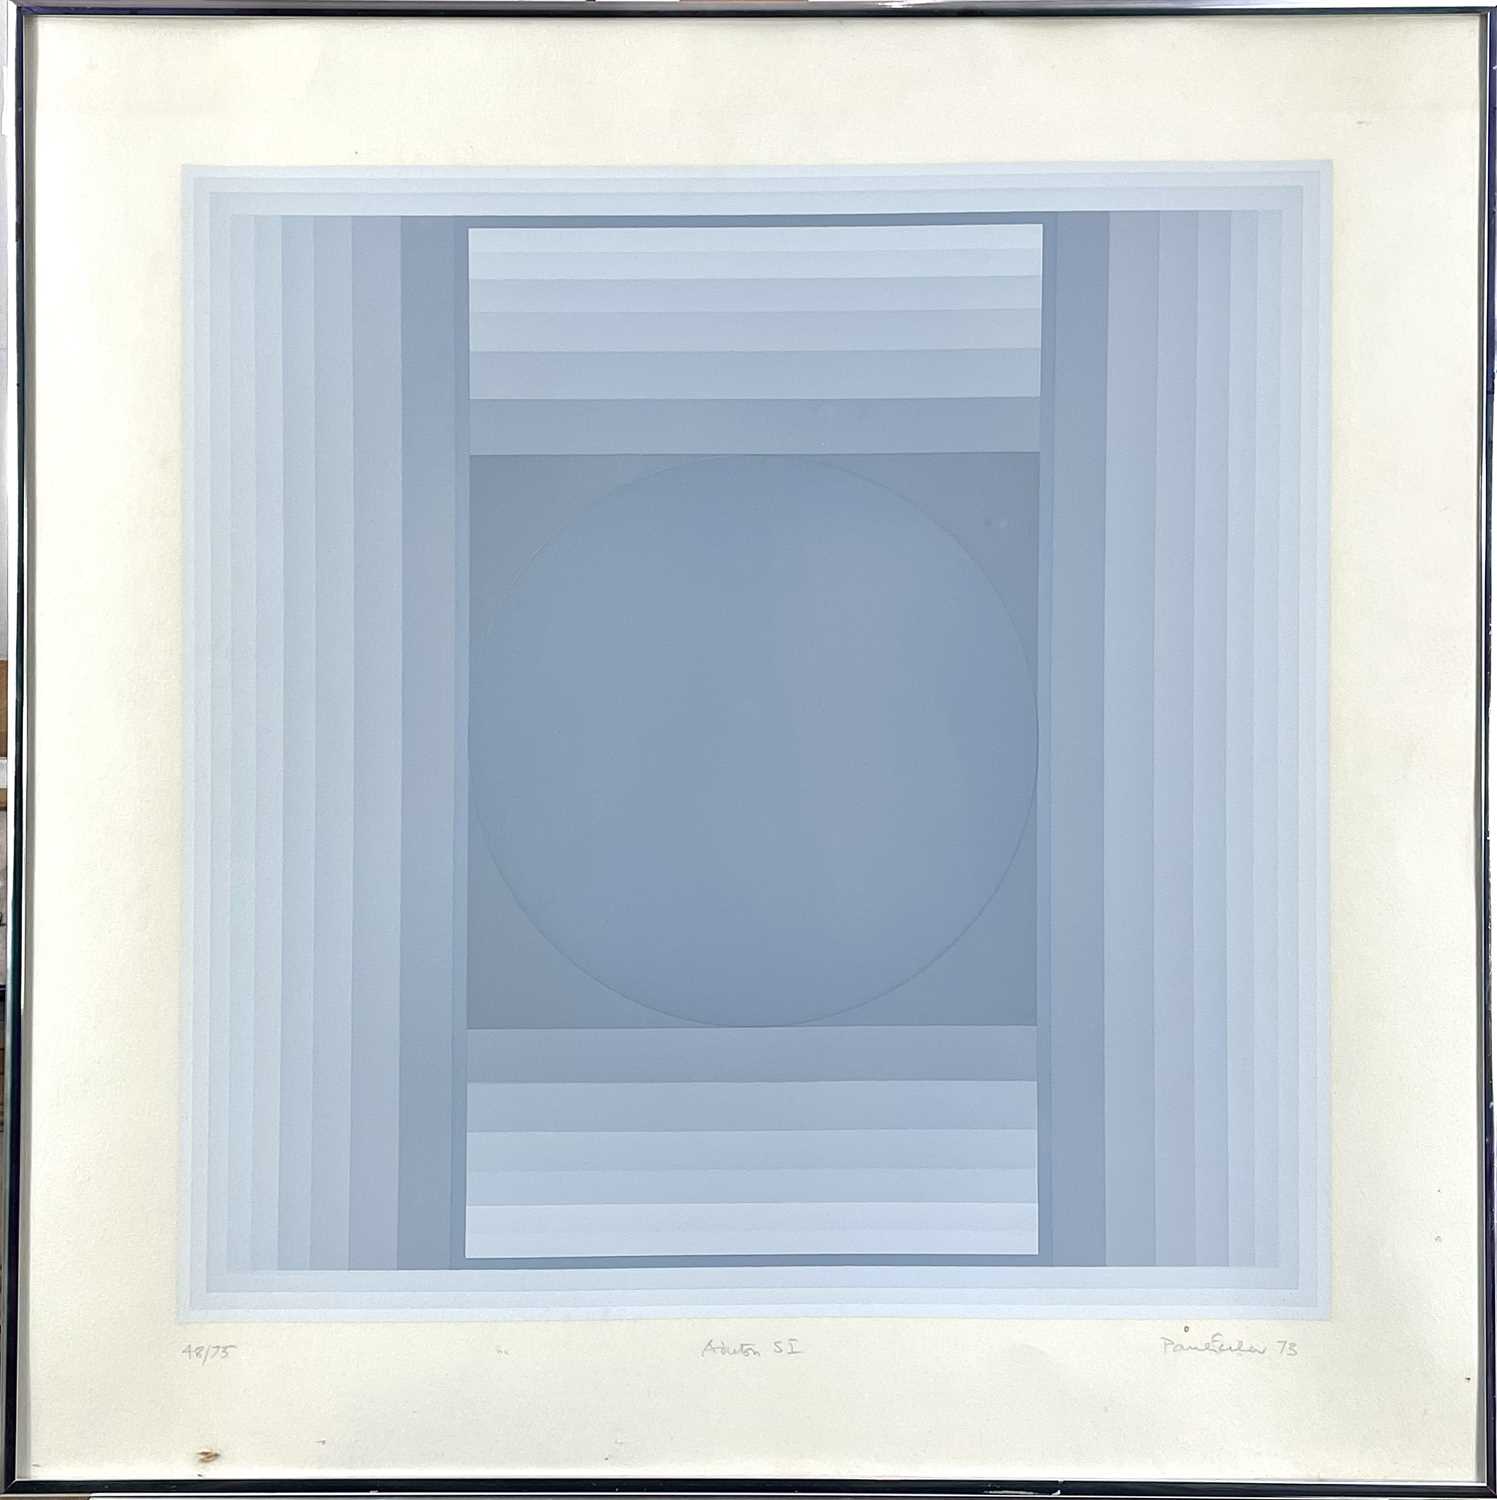 Paul FEILER (1918-2013) Aduton S I, 1973 - Image 2 of 3